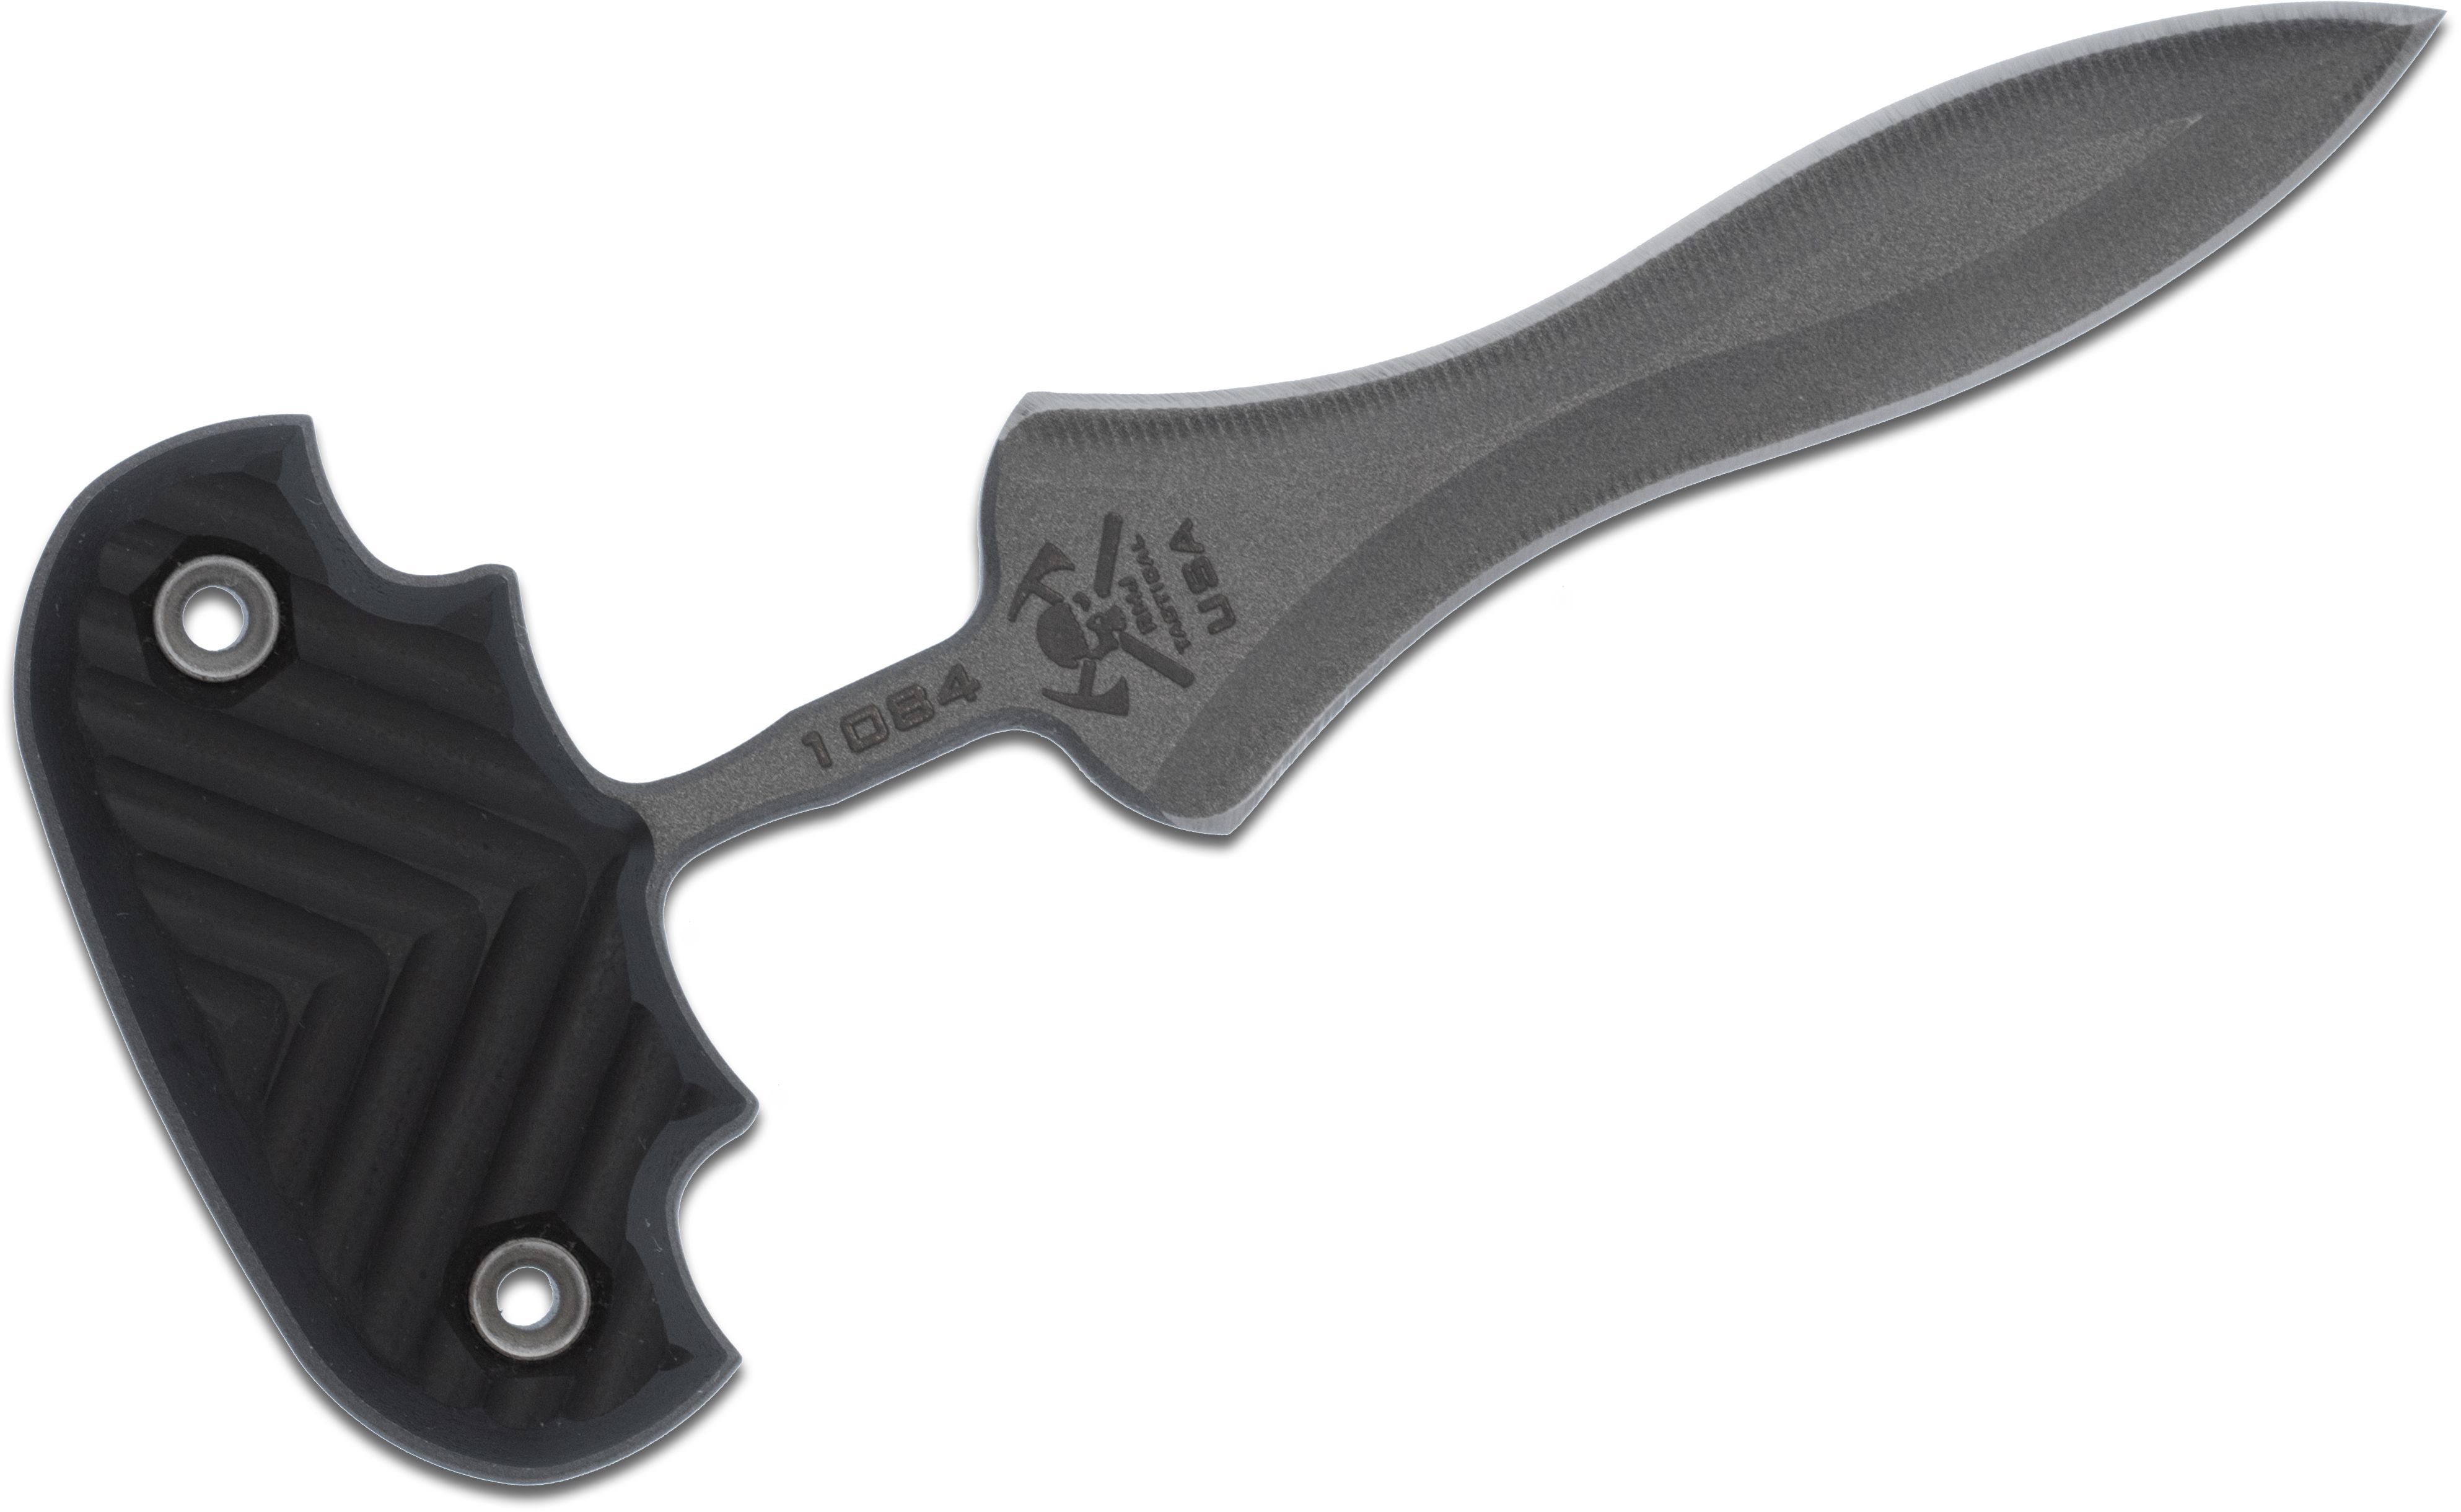 RMJ Jackdaw Cleaver Style Fixed Blade Black G10 Scales w/ Tungsten Cerakote  Nitro V Plain Edge